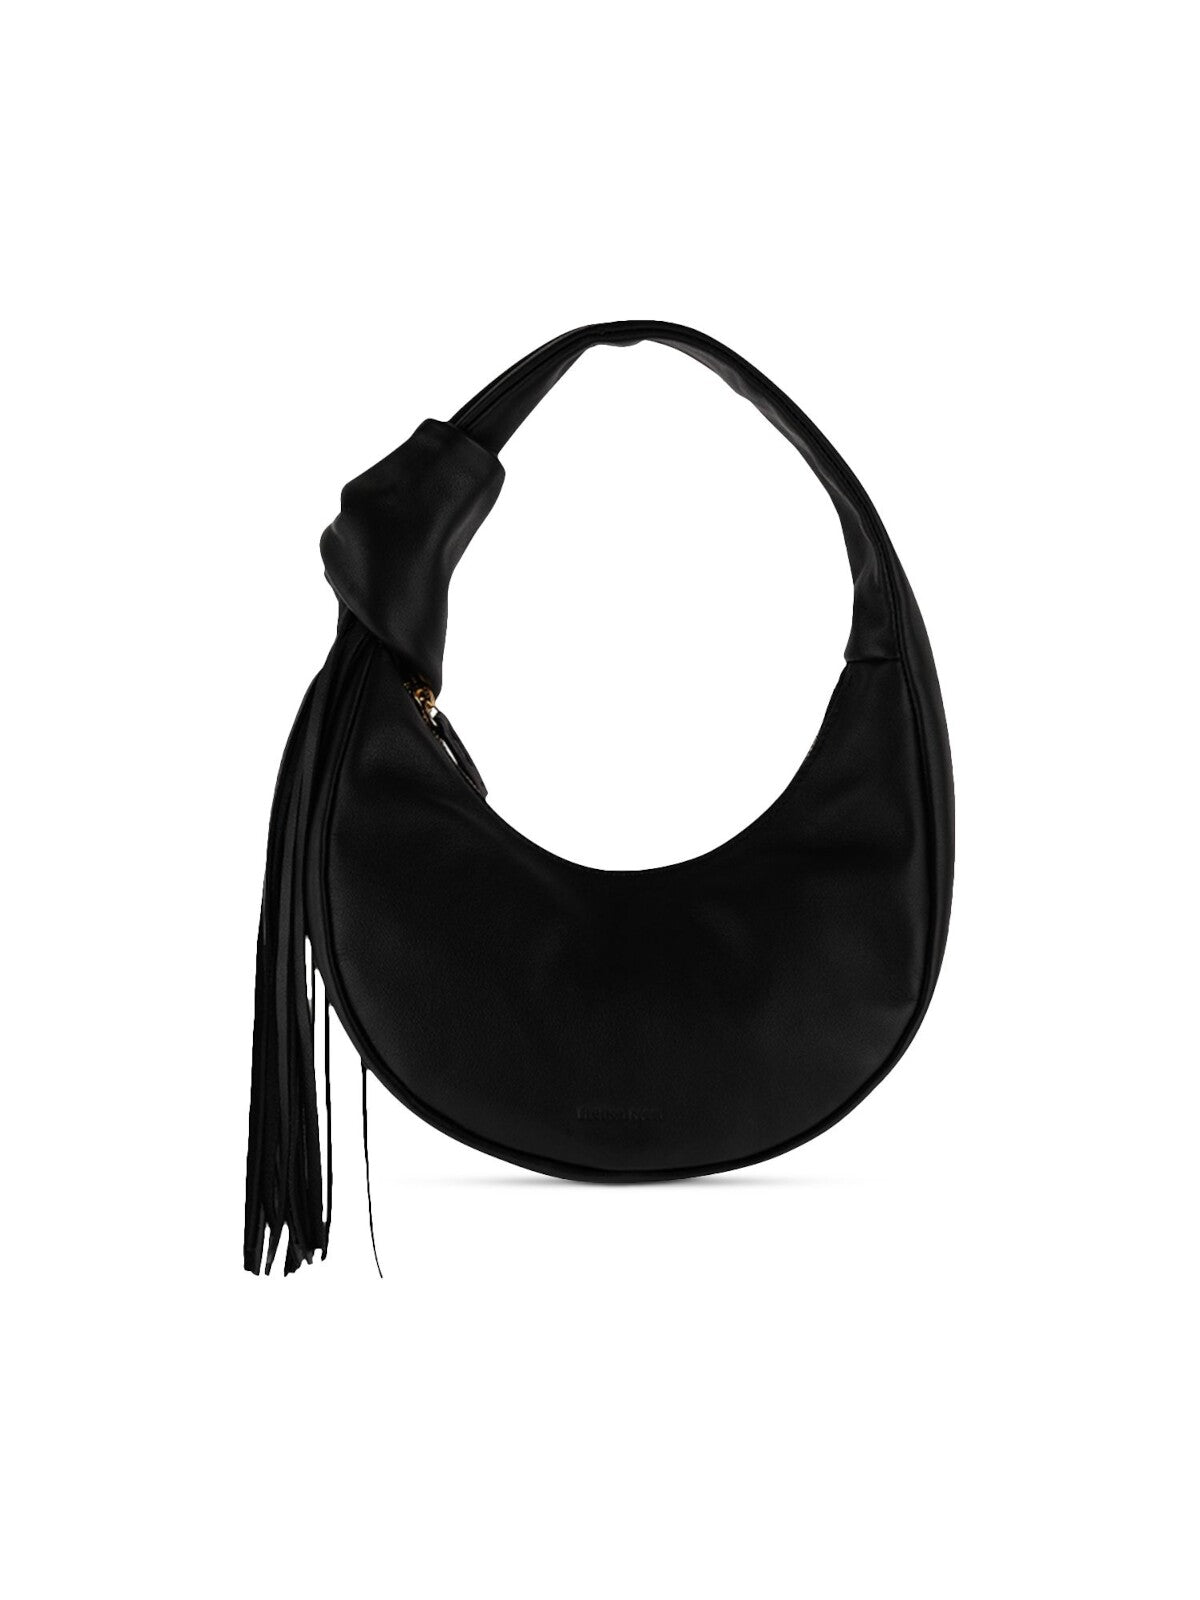 REIKE NEN Women's Black Solid Suede Tasseled Knot Detail Top Handle Strap Handbag Purse